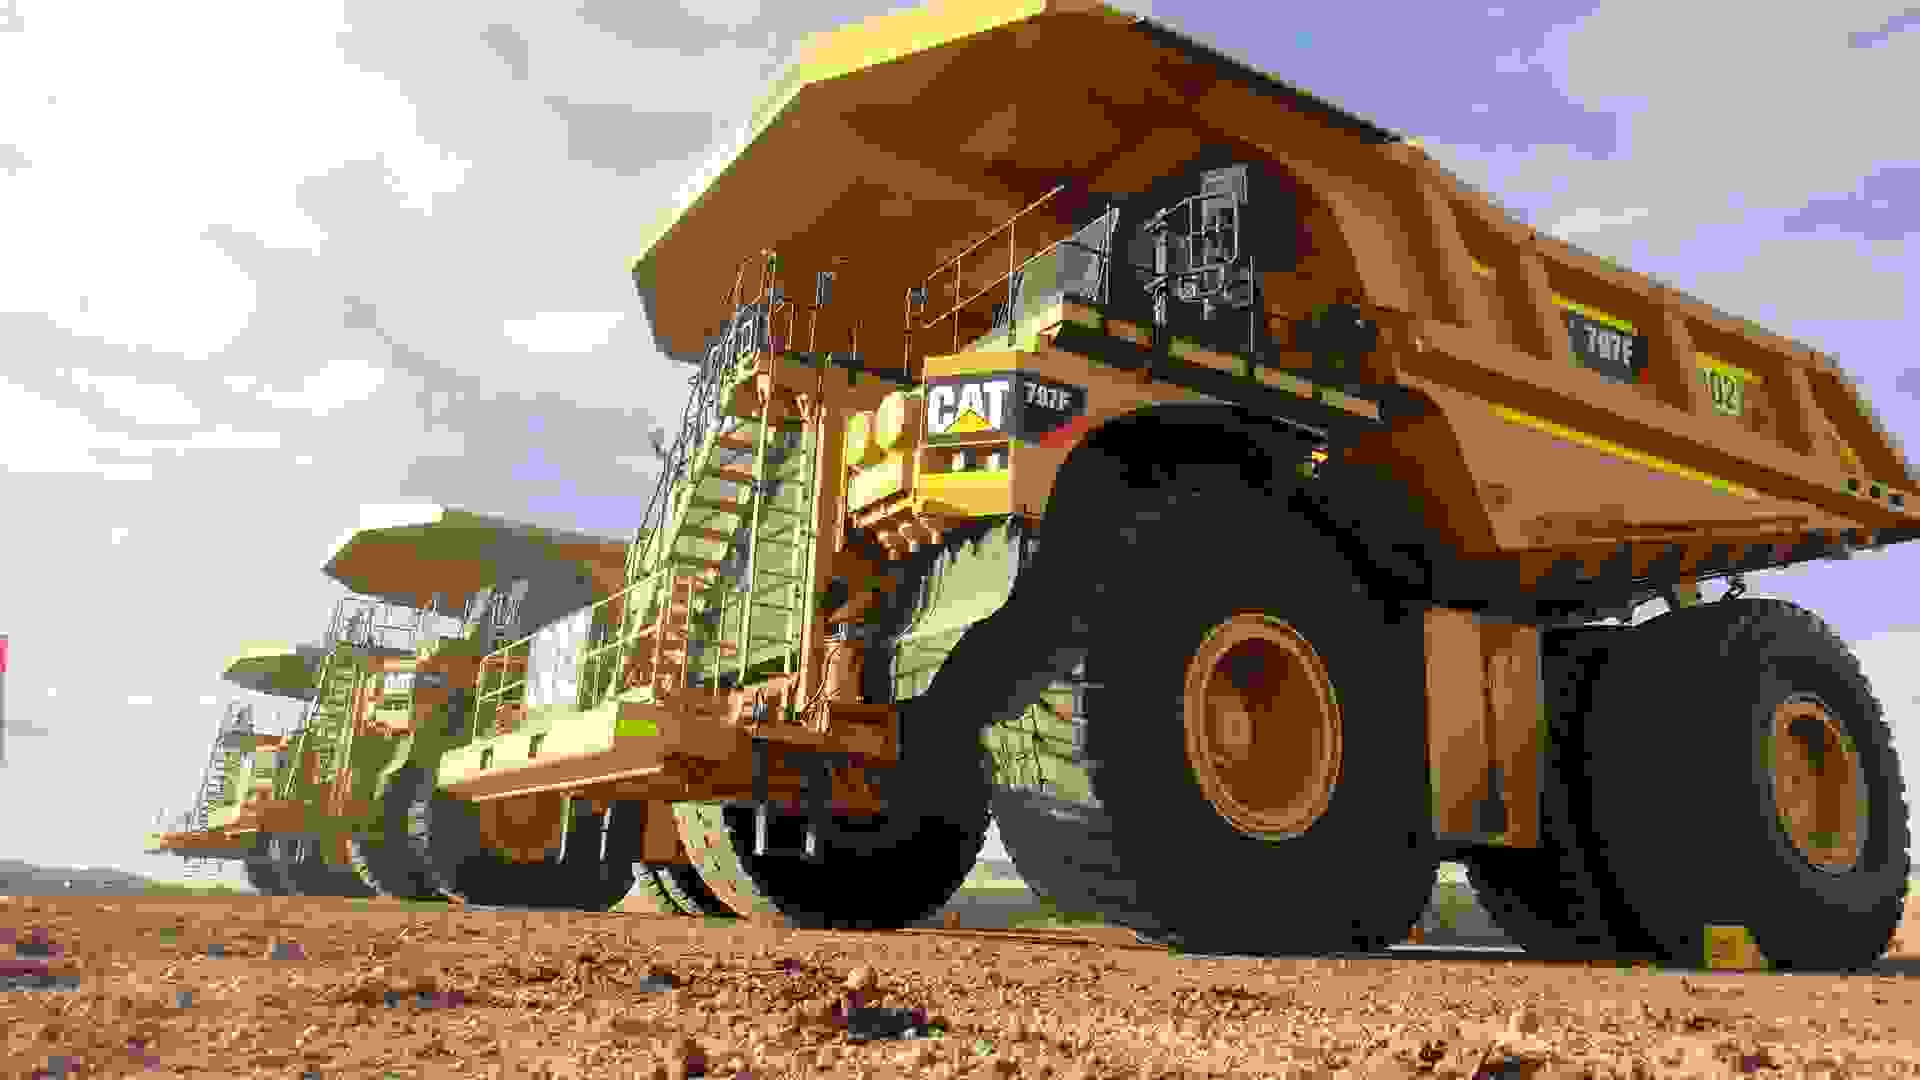 camion minero a hidrogeno